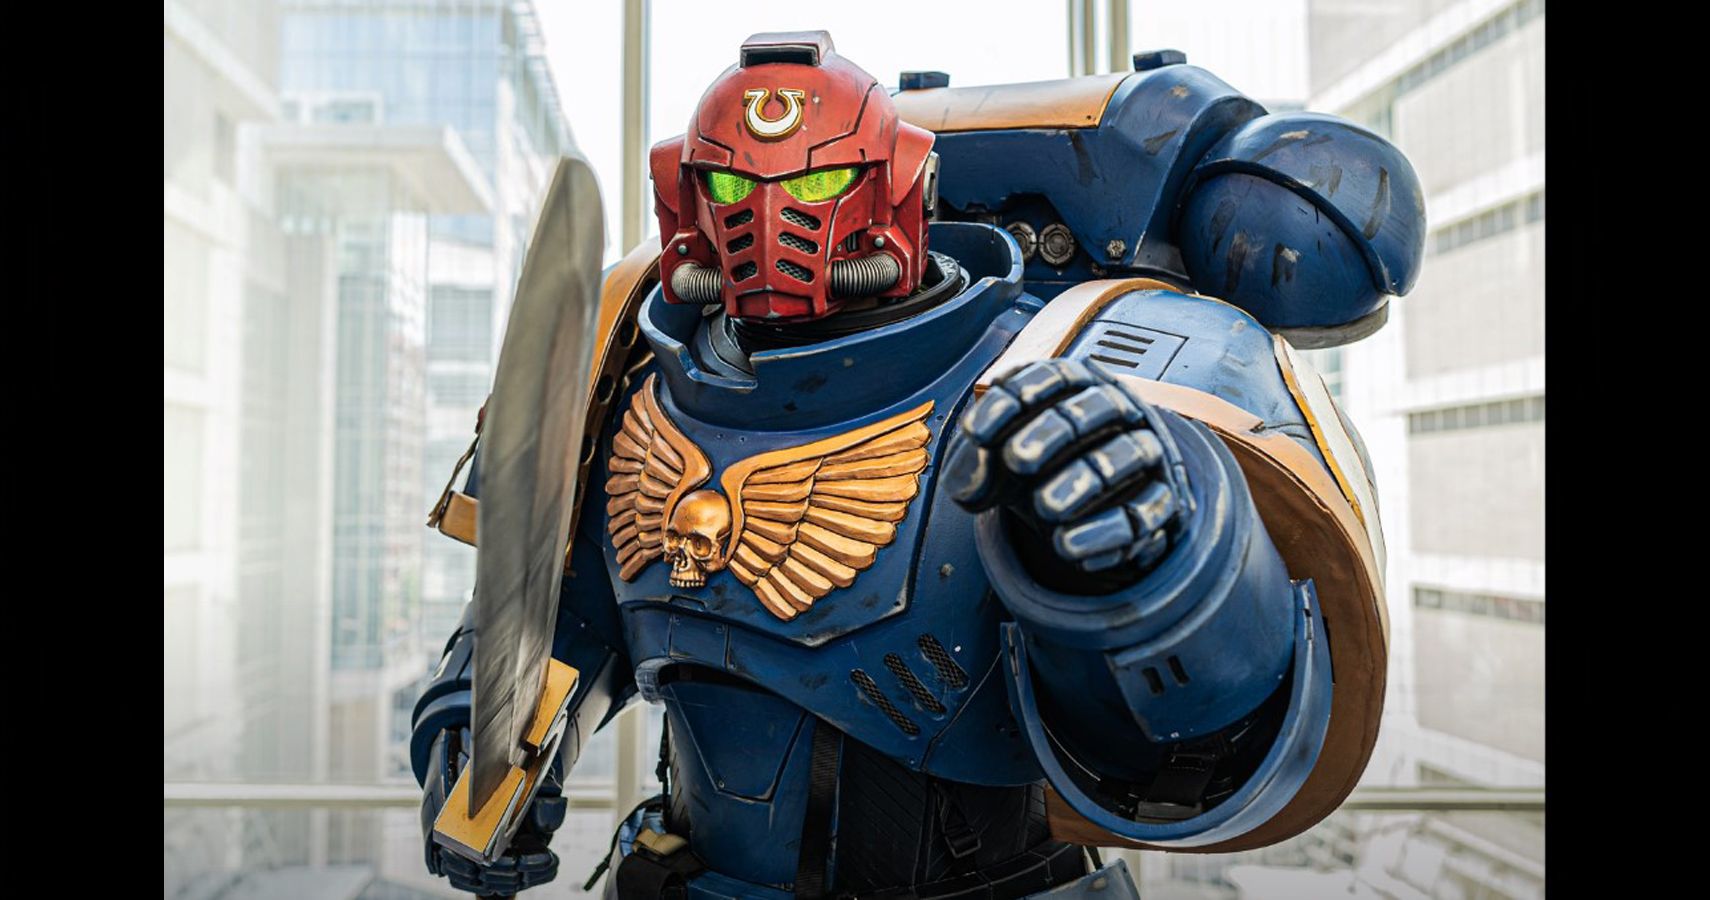 Space Suit Engineer Creates Incredible Warhammer Astartes Costume